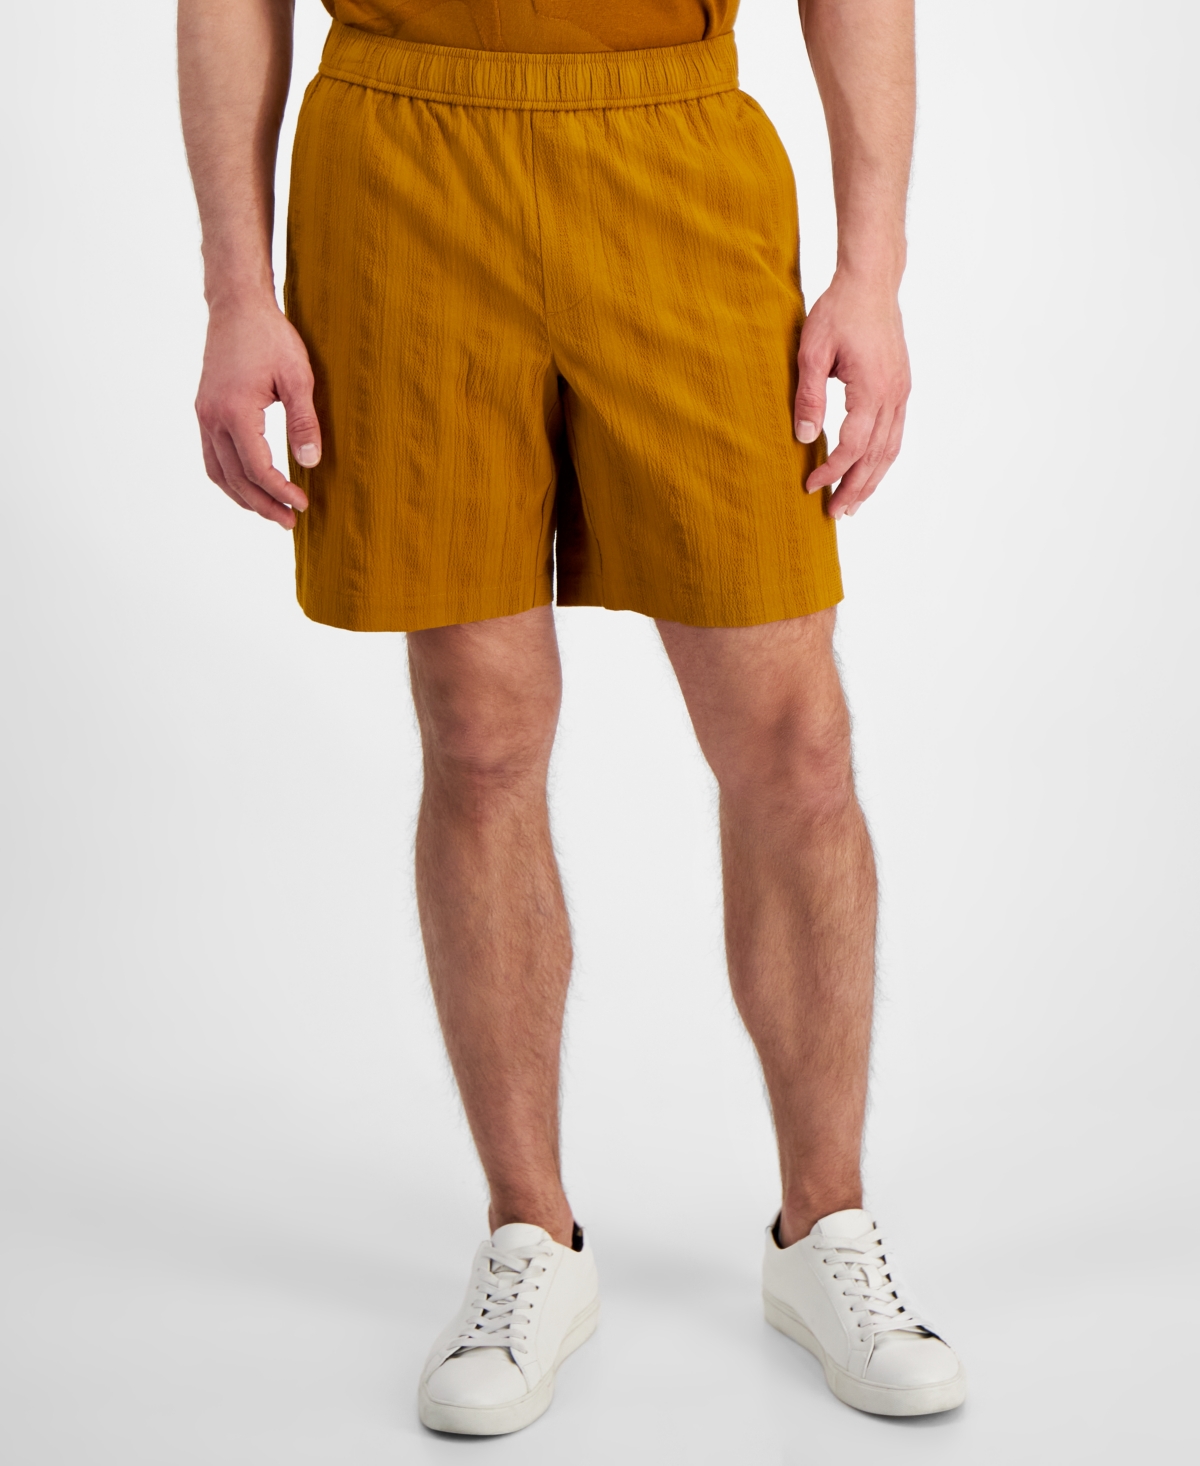 Men's Textured Cotton Drawstring Three-Pocket Shorts, Created for Macy's - Light Amber